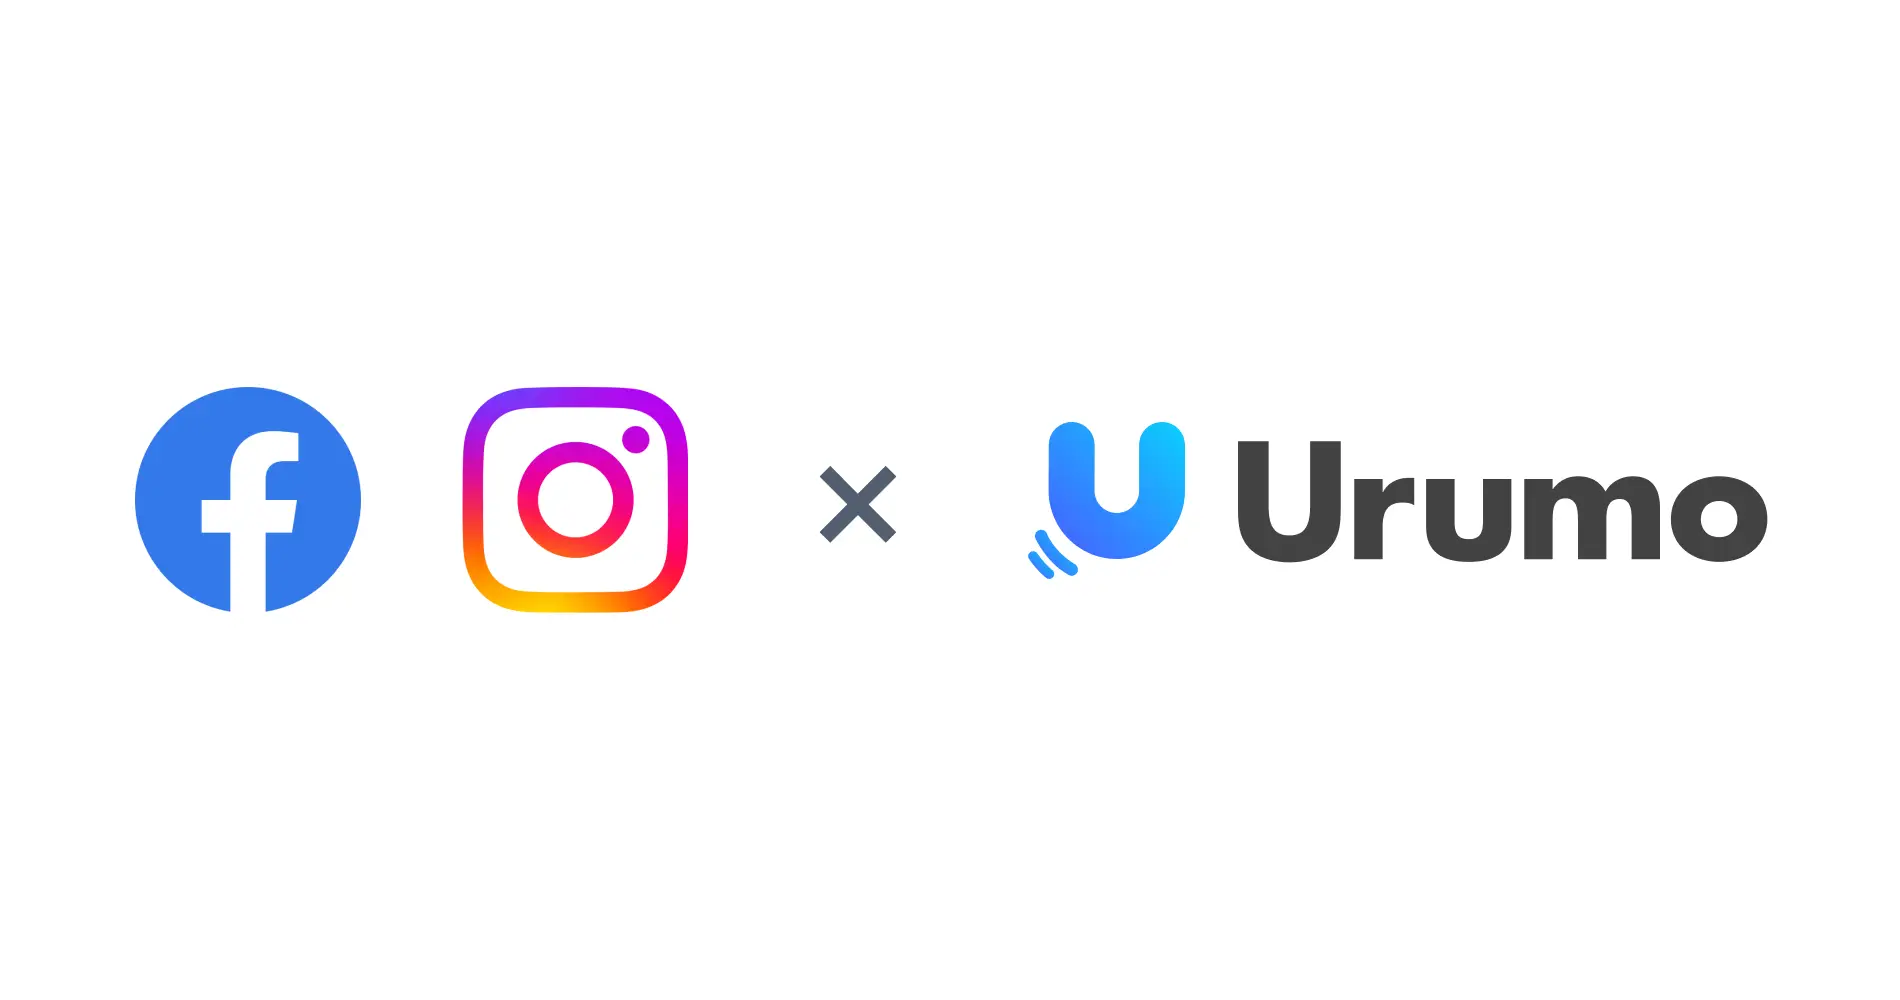 「MarkeZine」にて『Urumo』とFacebook、Instagram各メディアとのデータ連携に関する記事が掲載されました